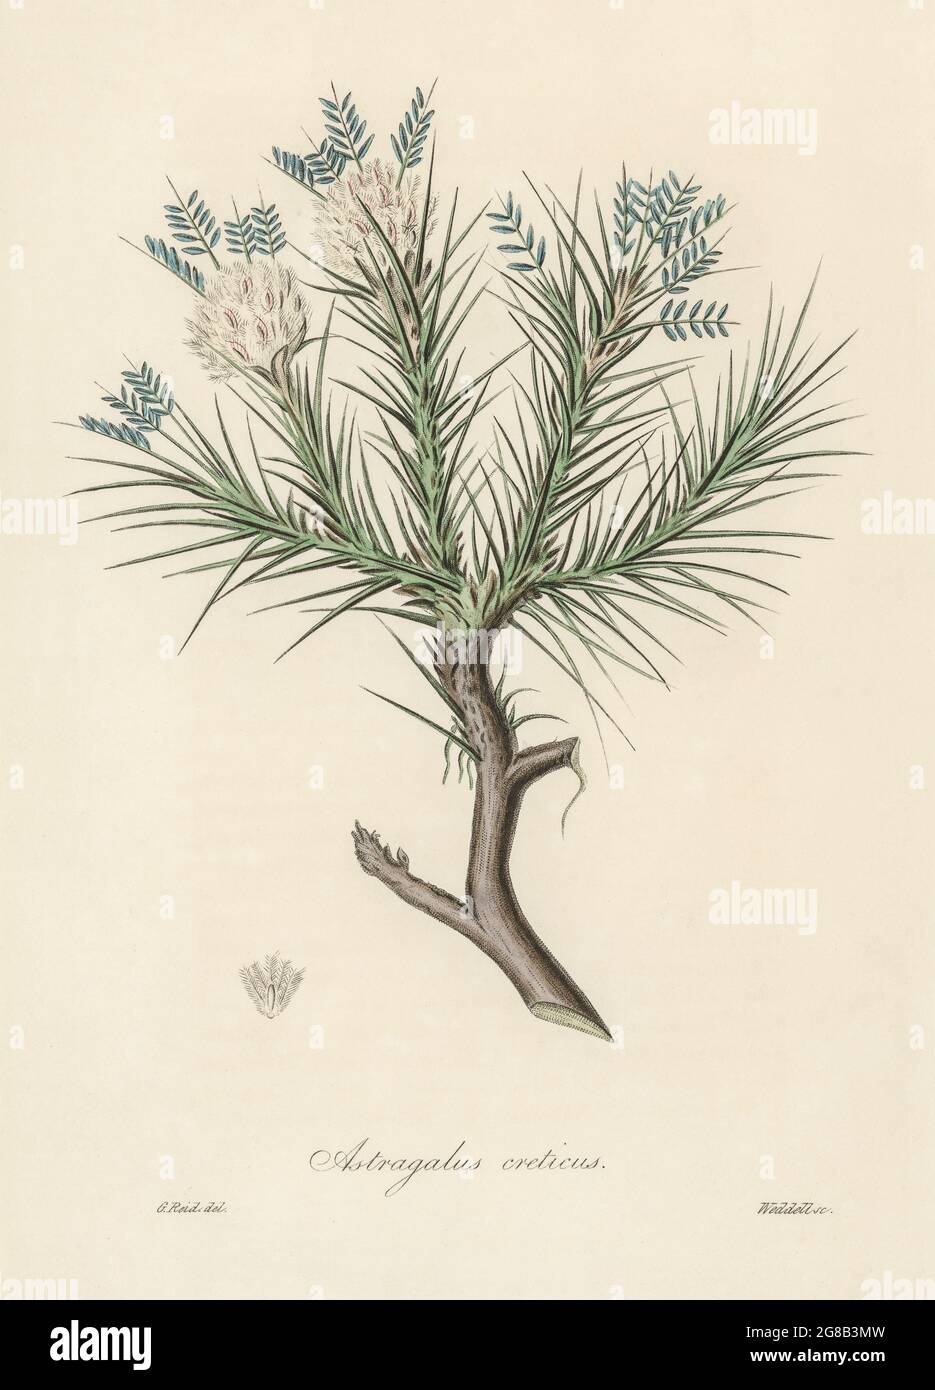 Astragalo creticus illustrazione da Medical botanica (1836) da John Stephenson e James Morss Churchill. Foto Stock